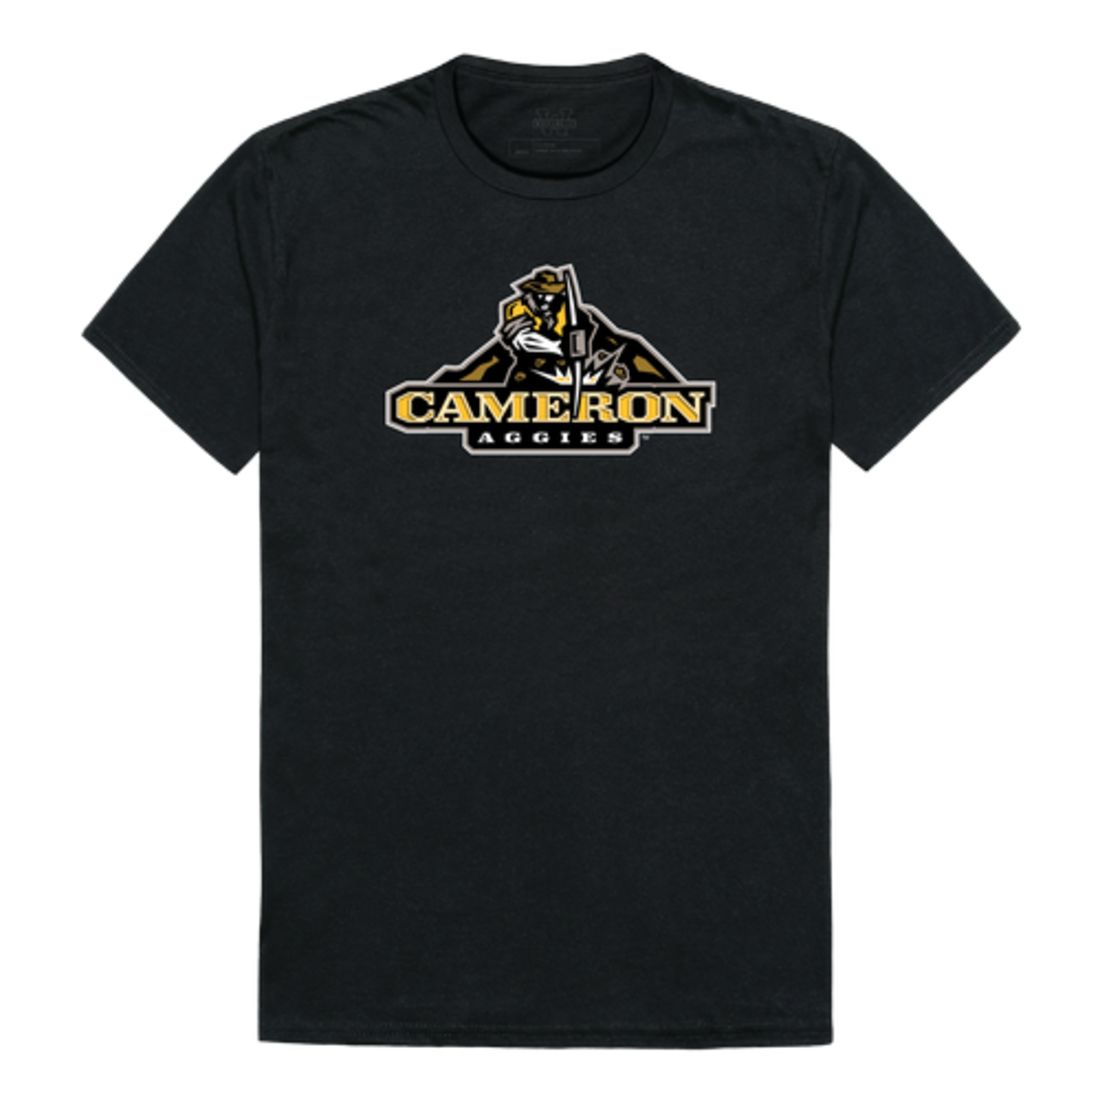 Cameron University Aggies The Freshmen T-Shirt Tee